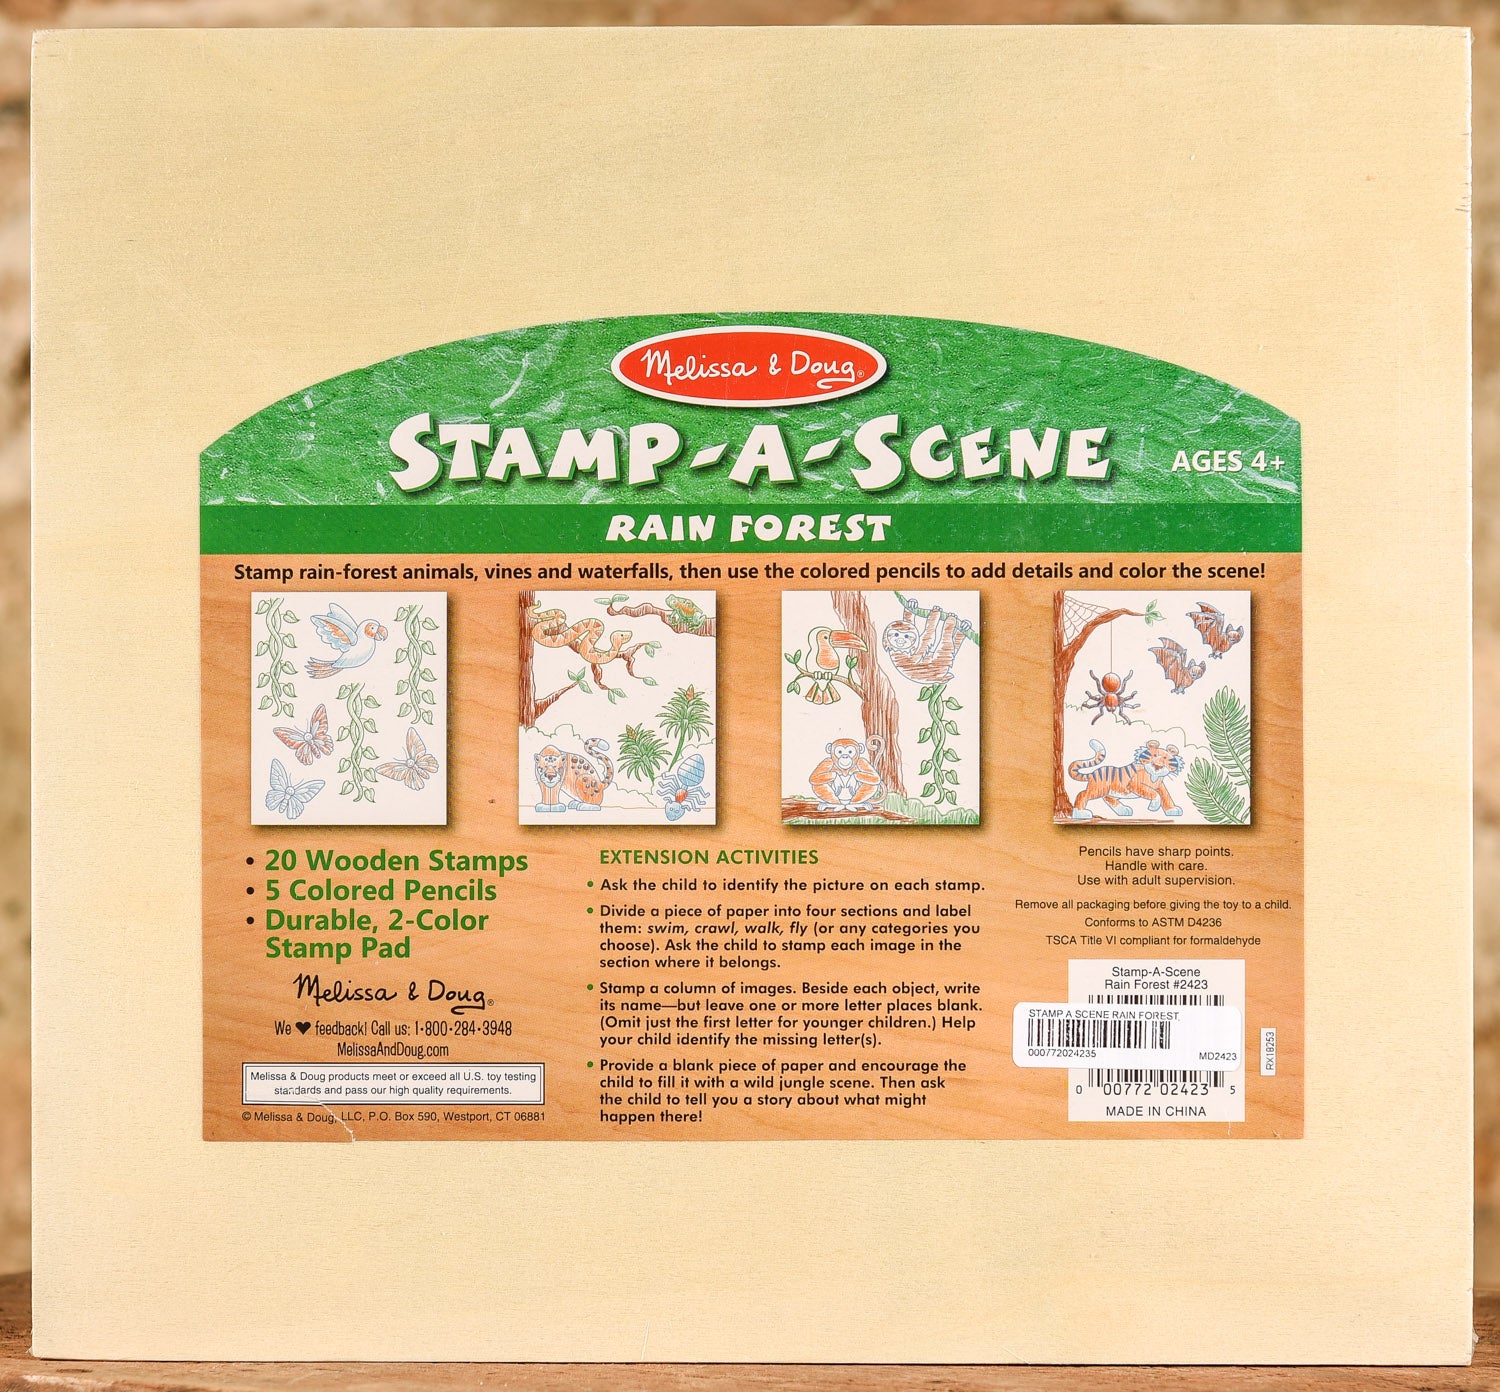 Wooden Stamp Set - Happy Handles Deluxe – Foothill Mercantile